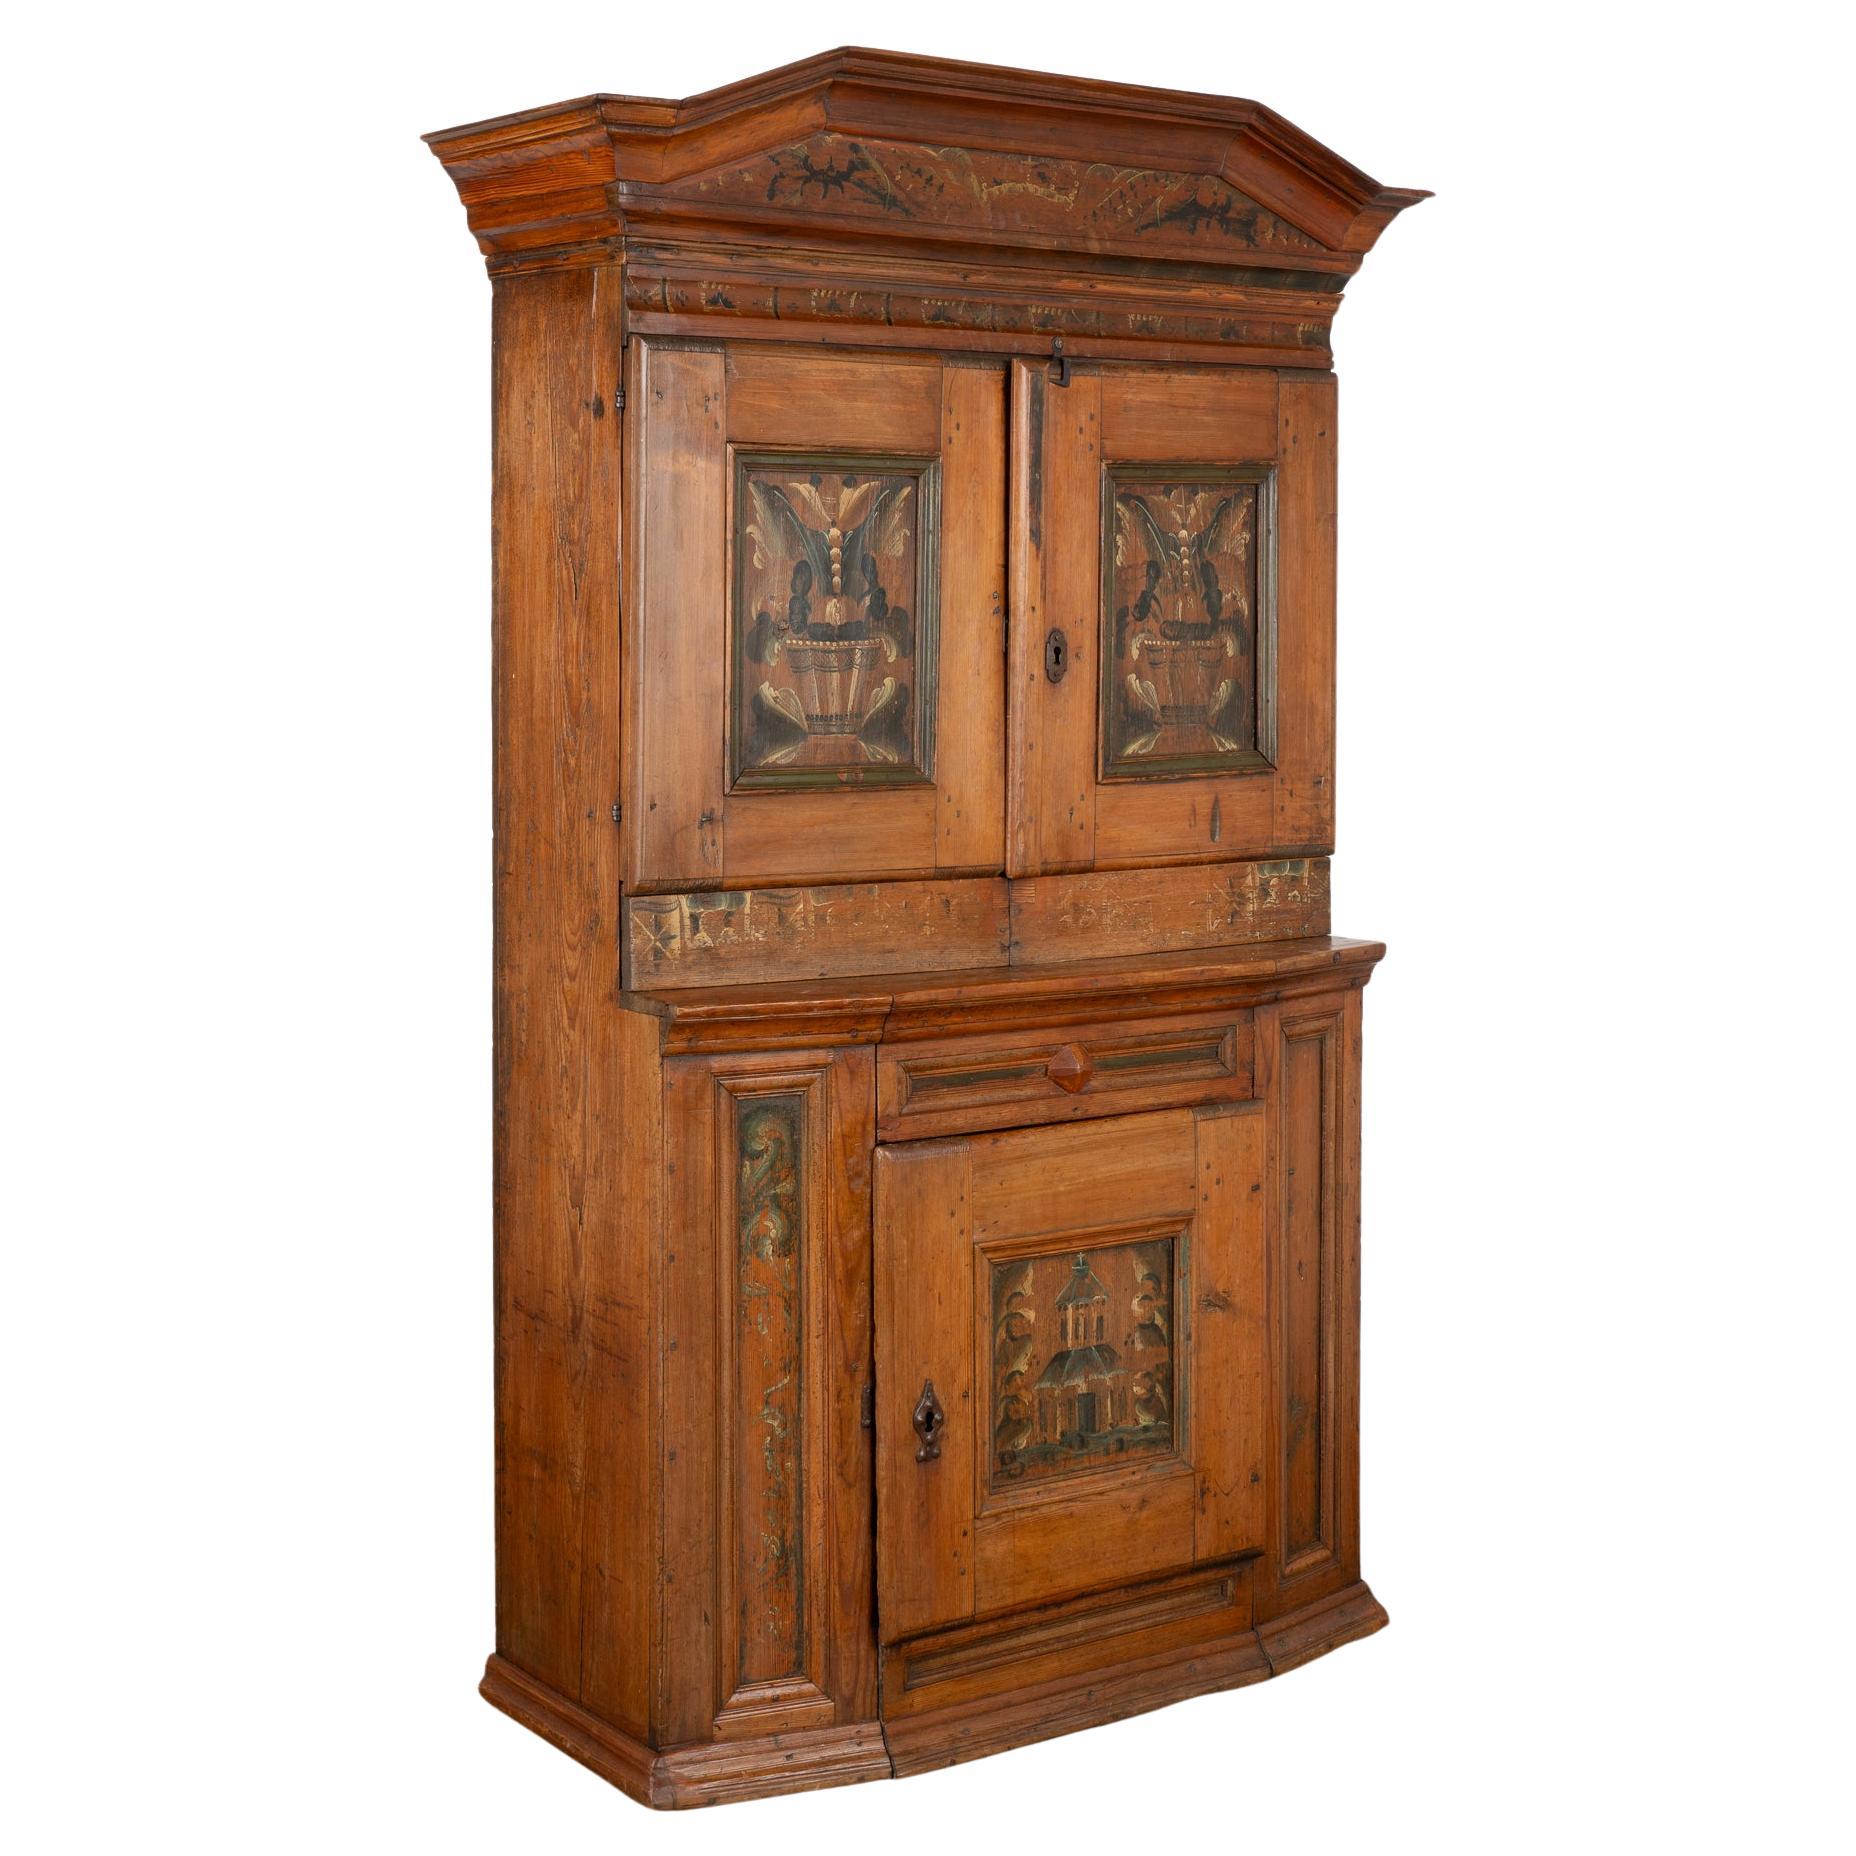 Original Painted Pine Swedish Cabinet Cupboard, circa 1820-40 For Sale